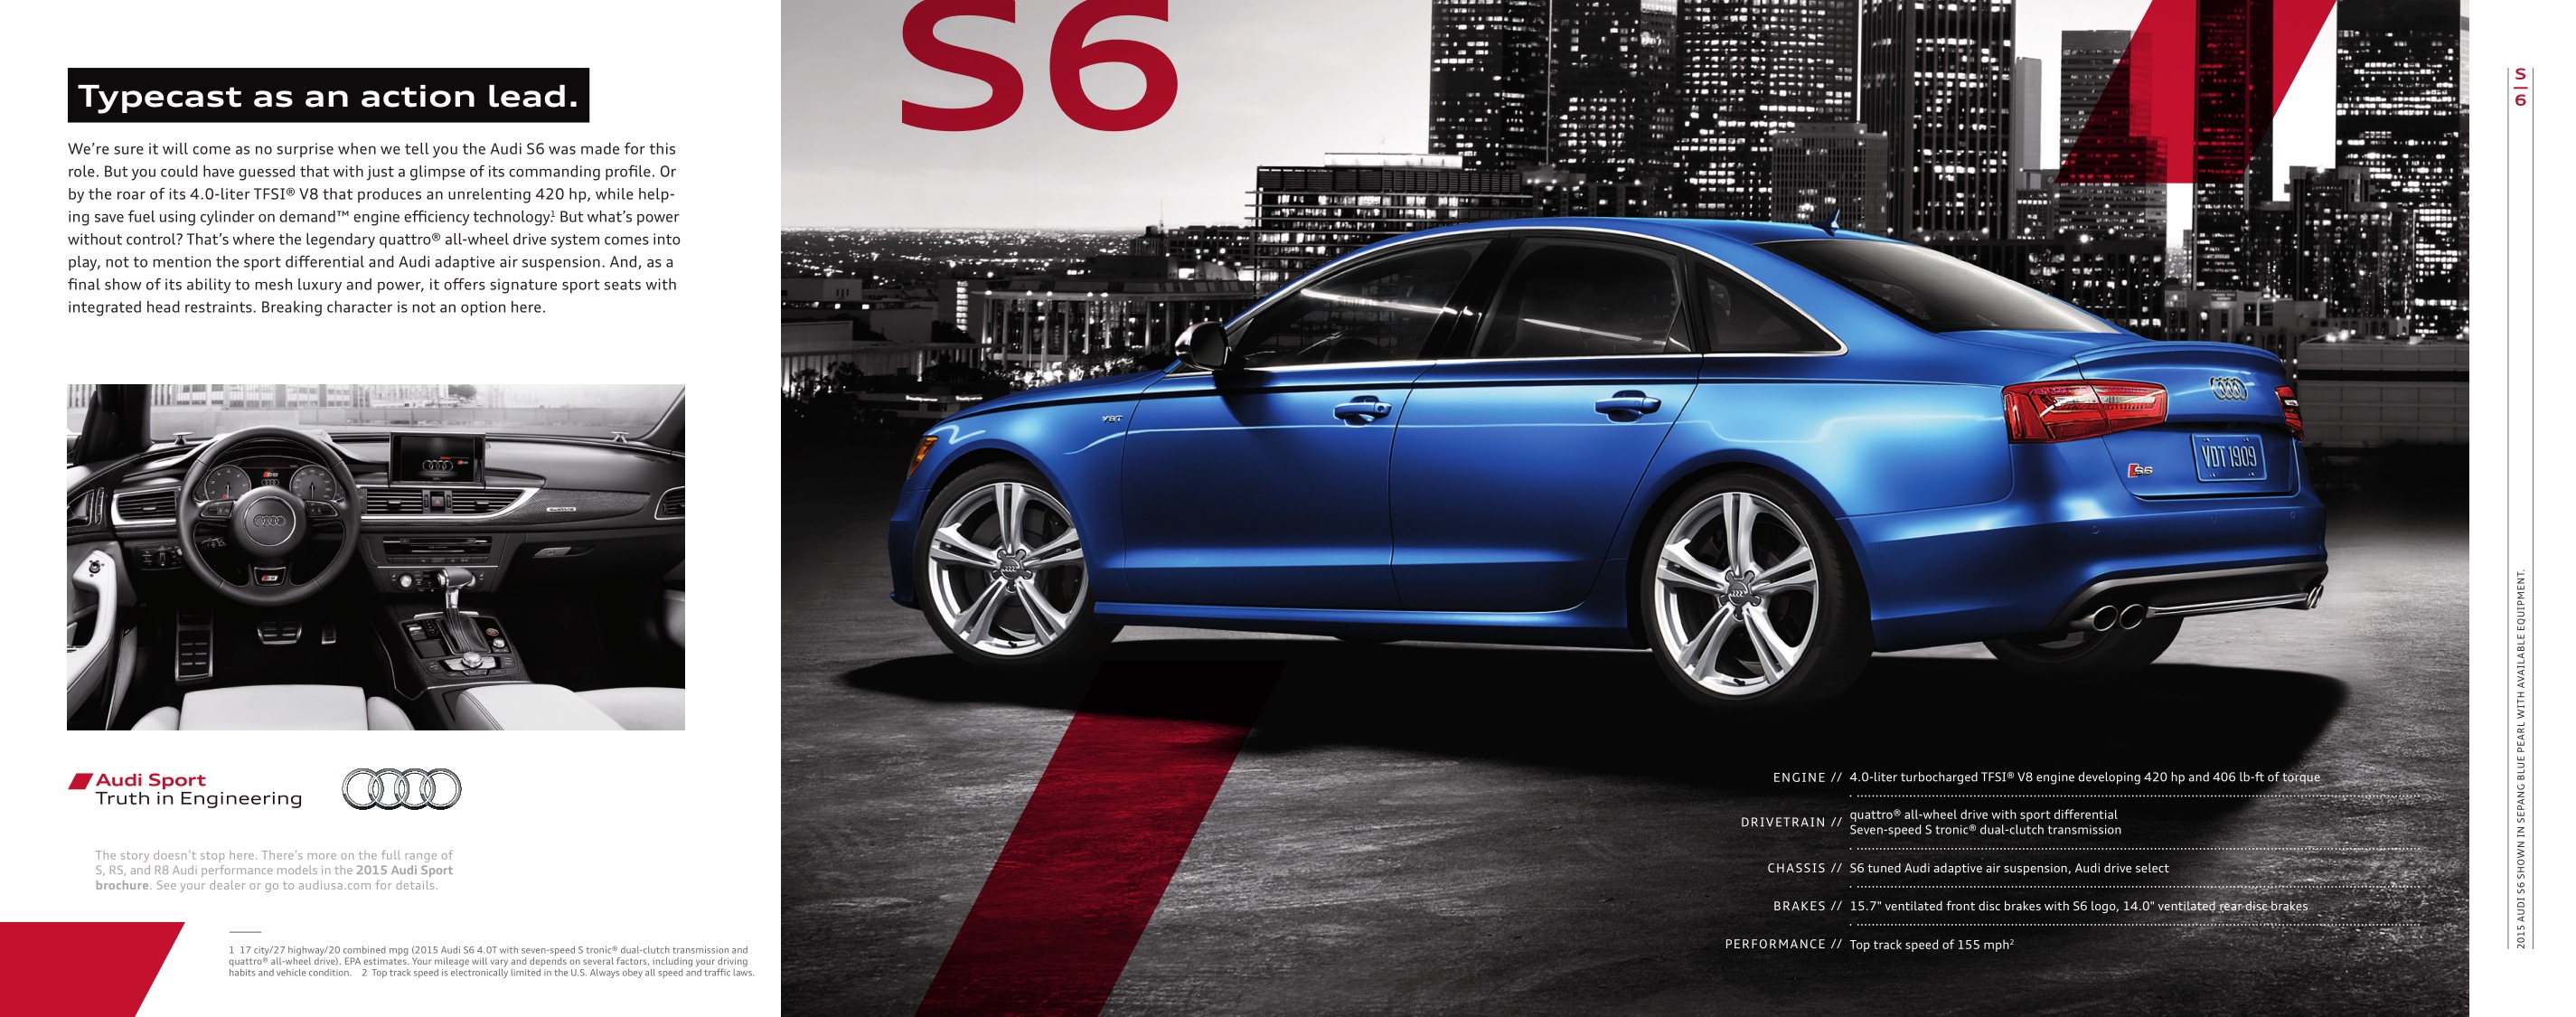 2015 Audi A6 Brochure Page 38